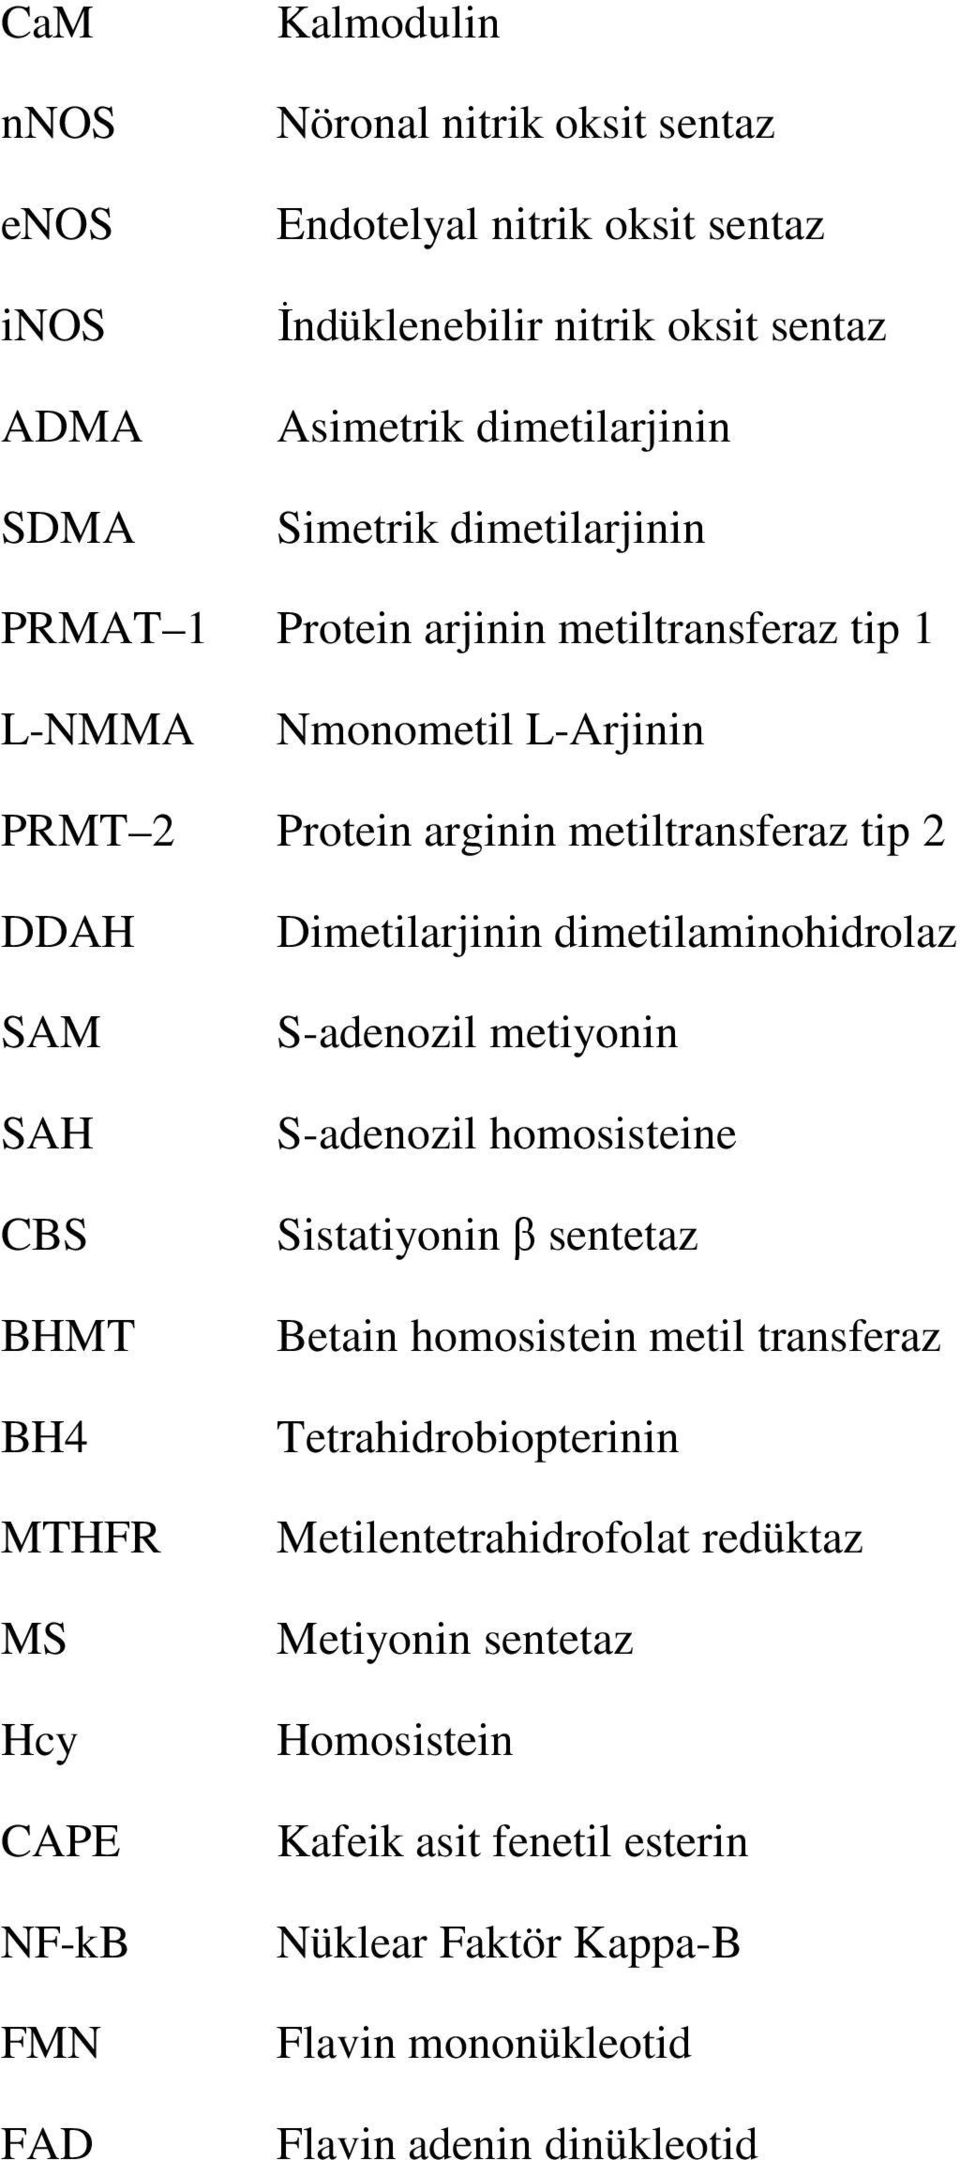 Hcy CAPE NF-kB FMN FAD Dimetilarjinin dimetilaminohidrolaz S-adenozil metiyonin S-adenozil homosisteine Sistatiyonin β sentetaz Betain homosistein metil transferaz